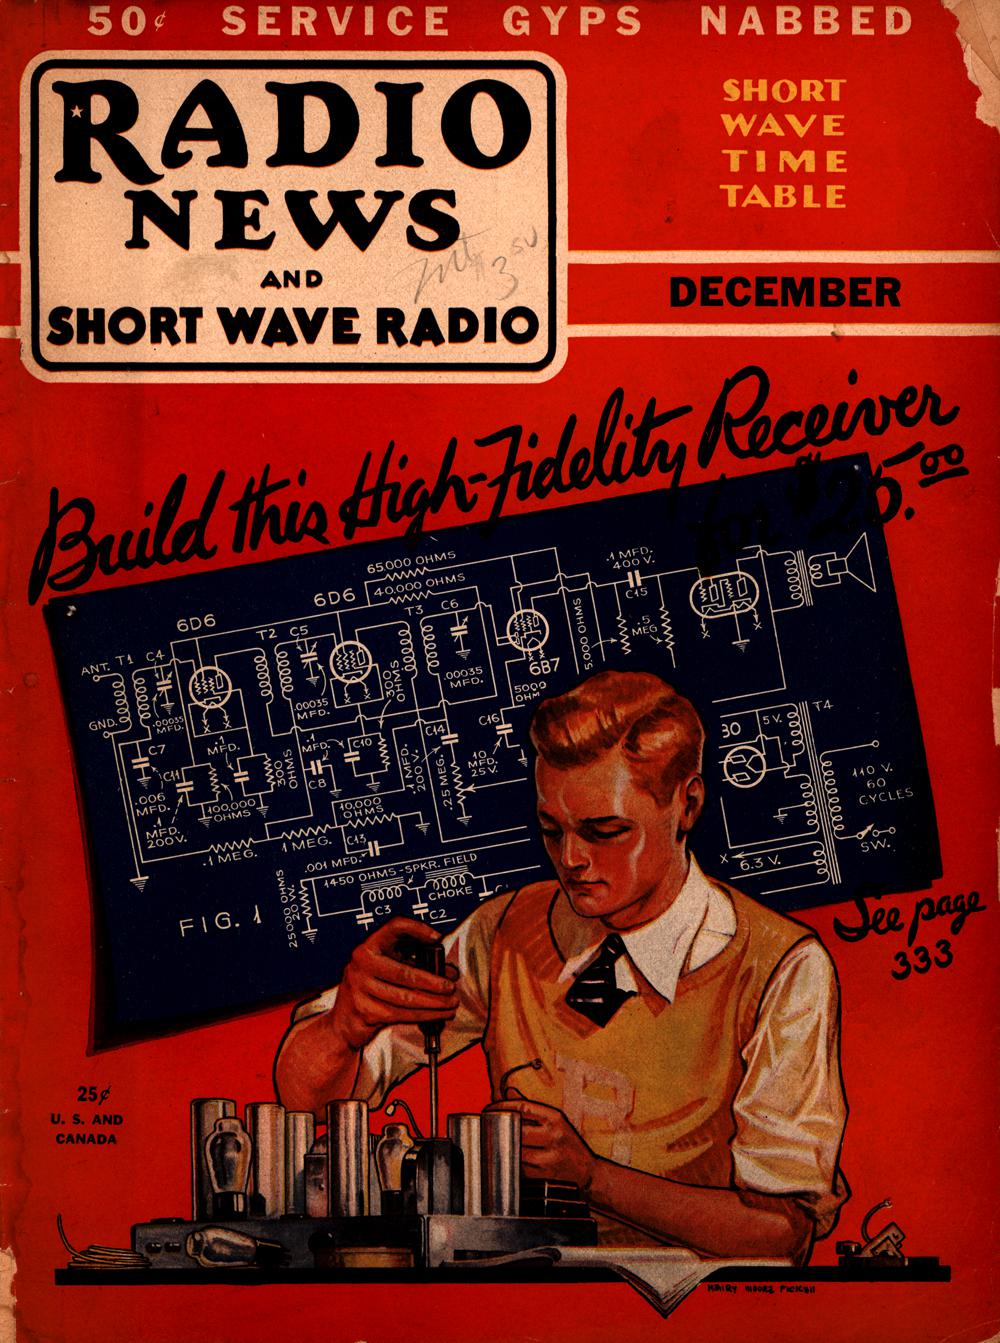 1936 - Radio news - Vol. 18, No. 6